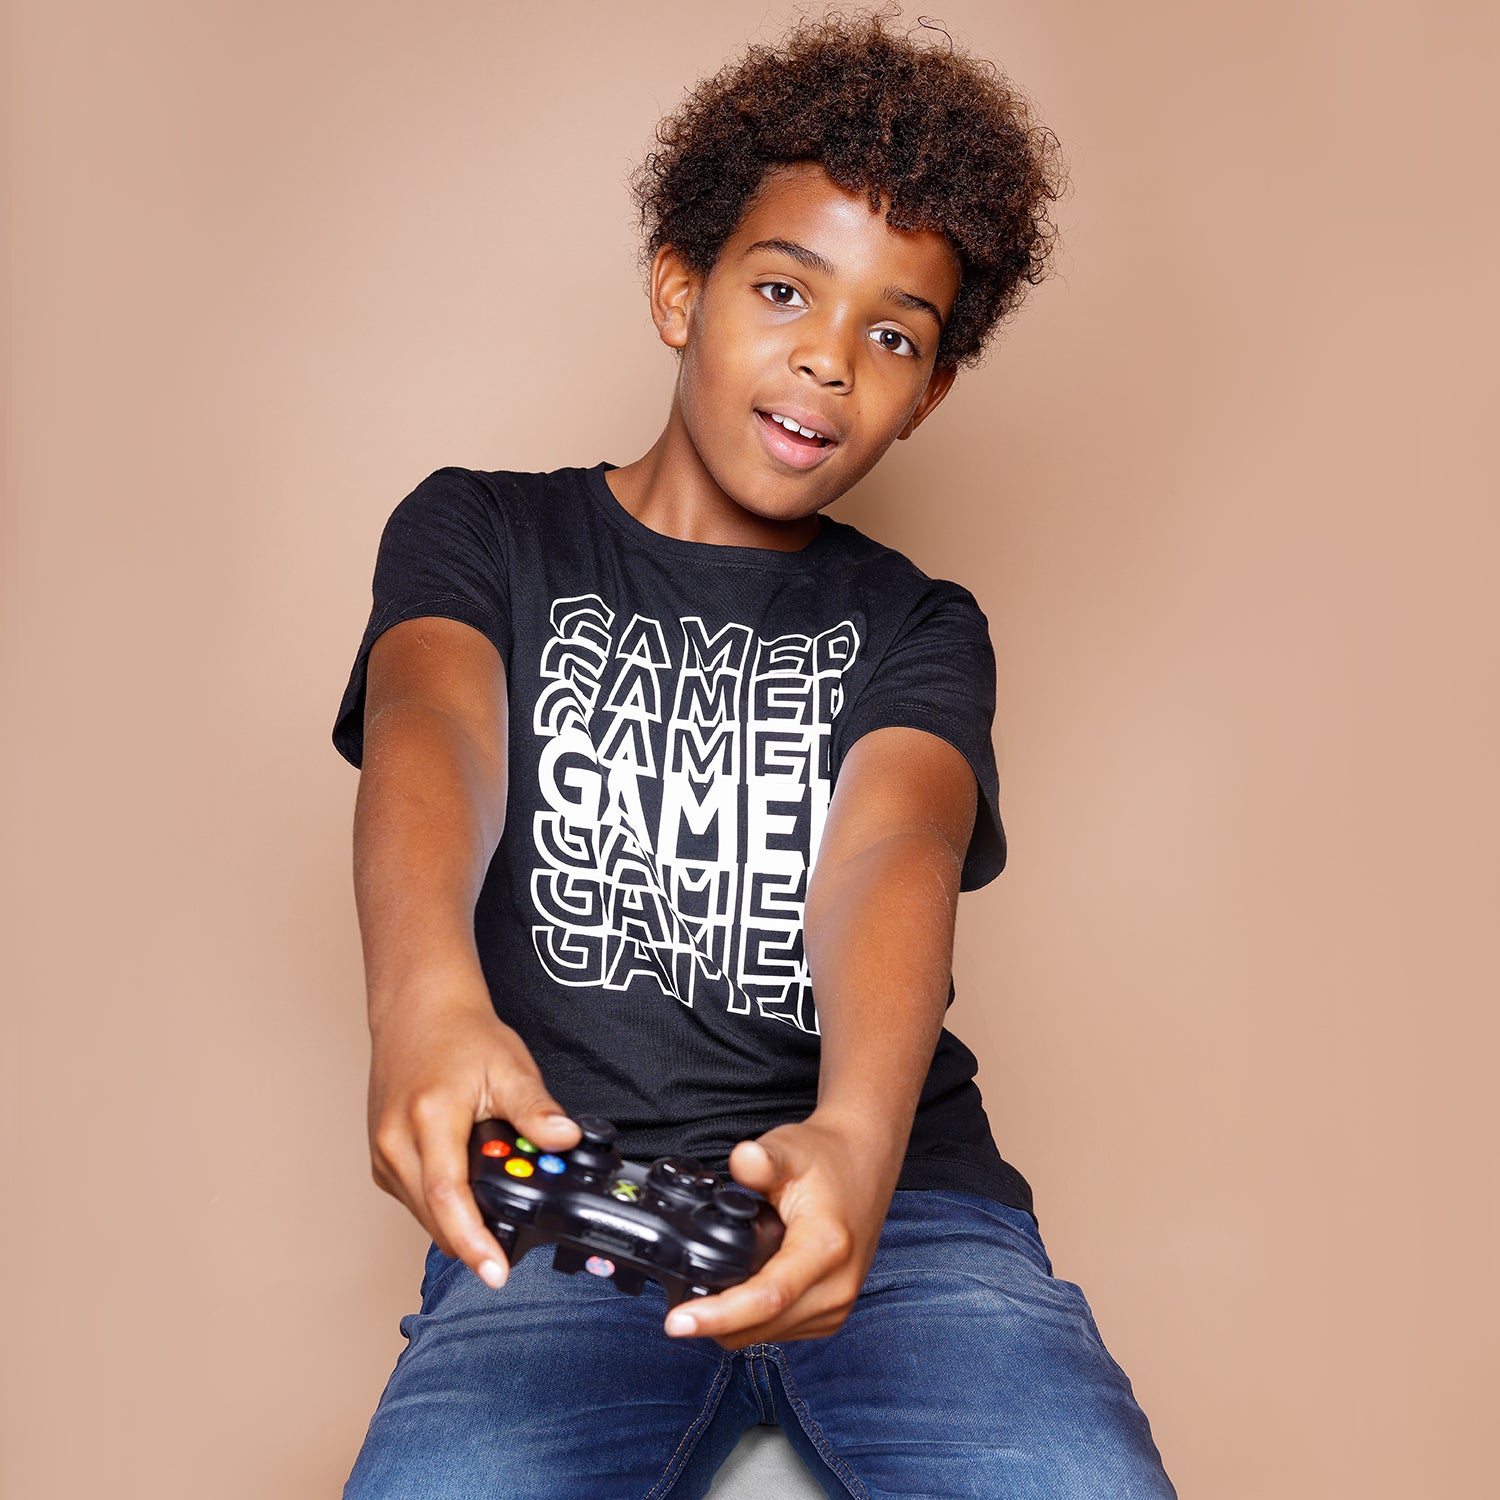 'Gamer' kids shortsleeve shirt